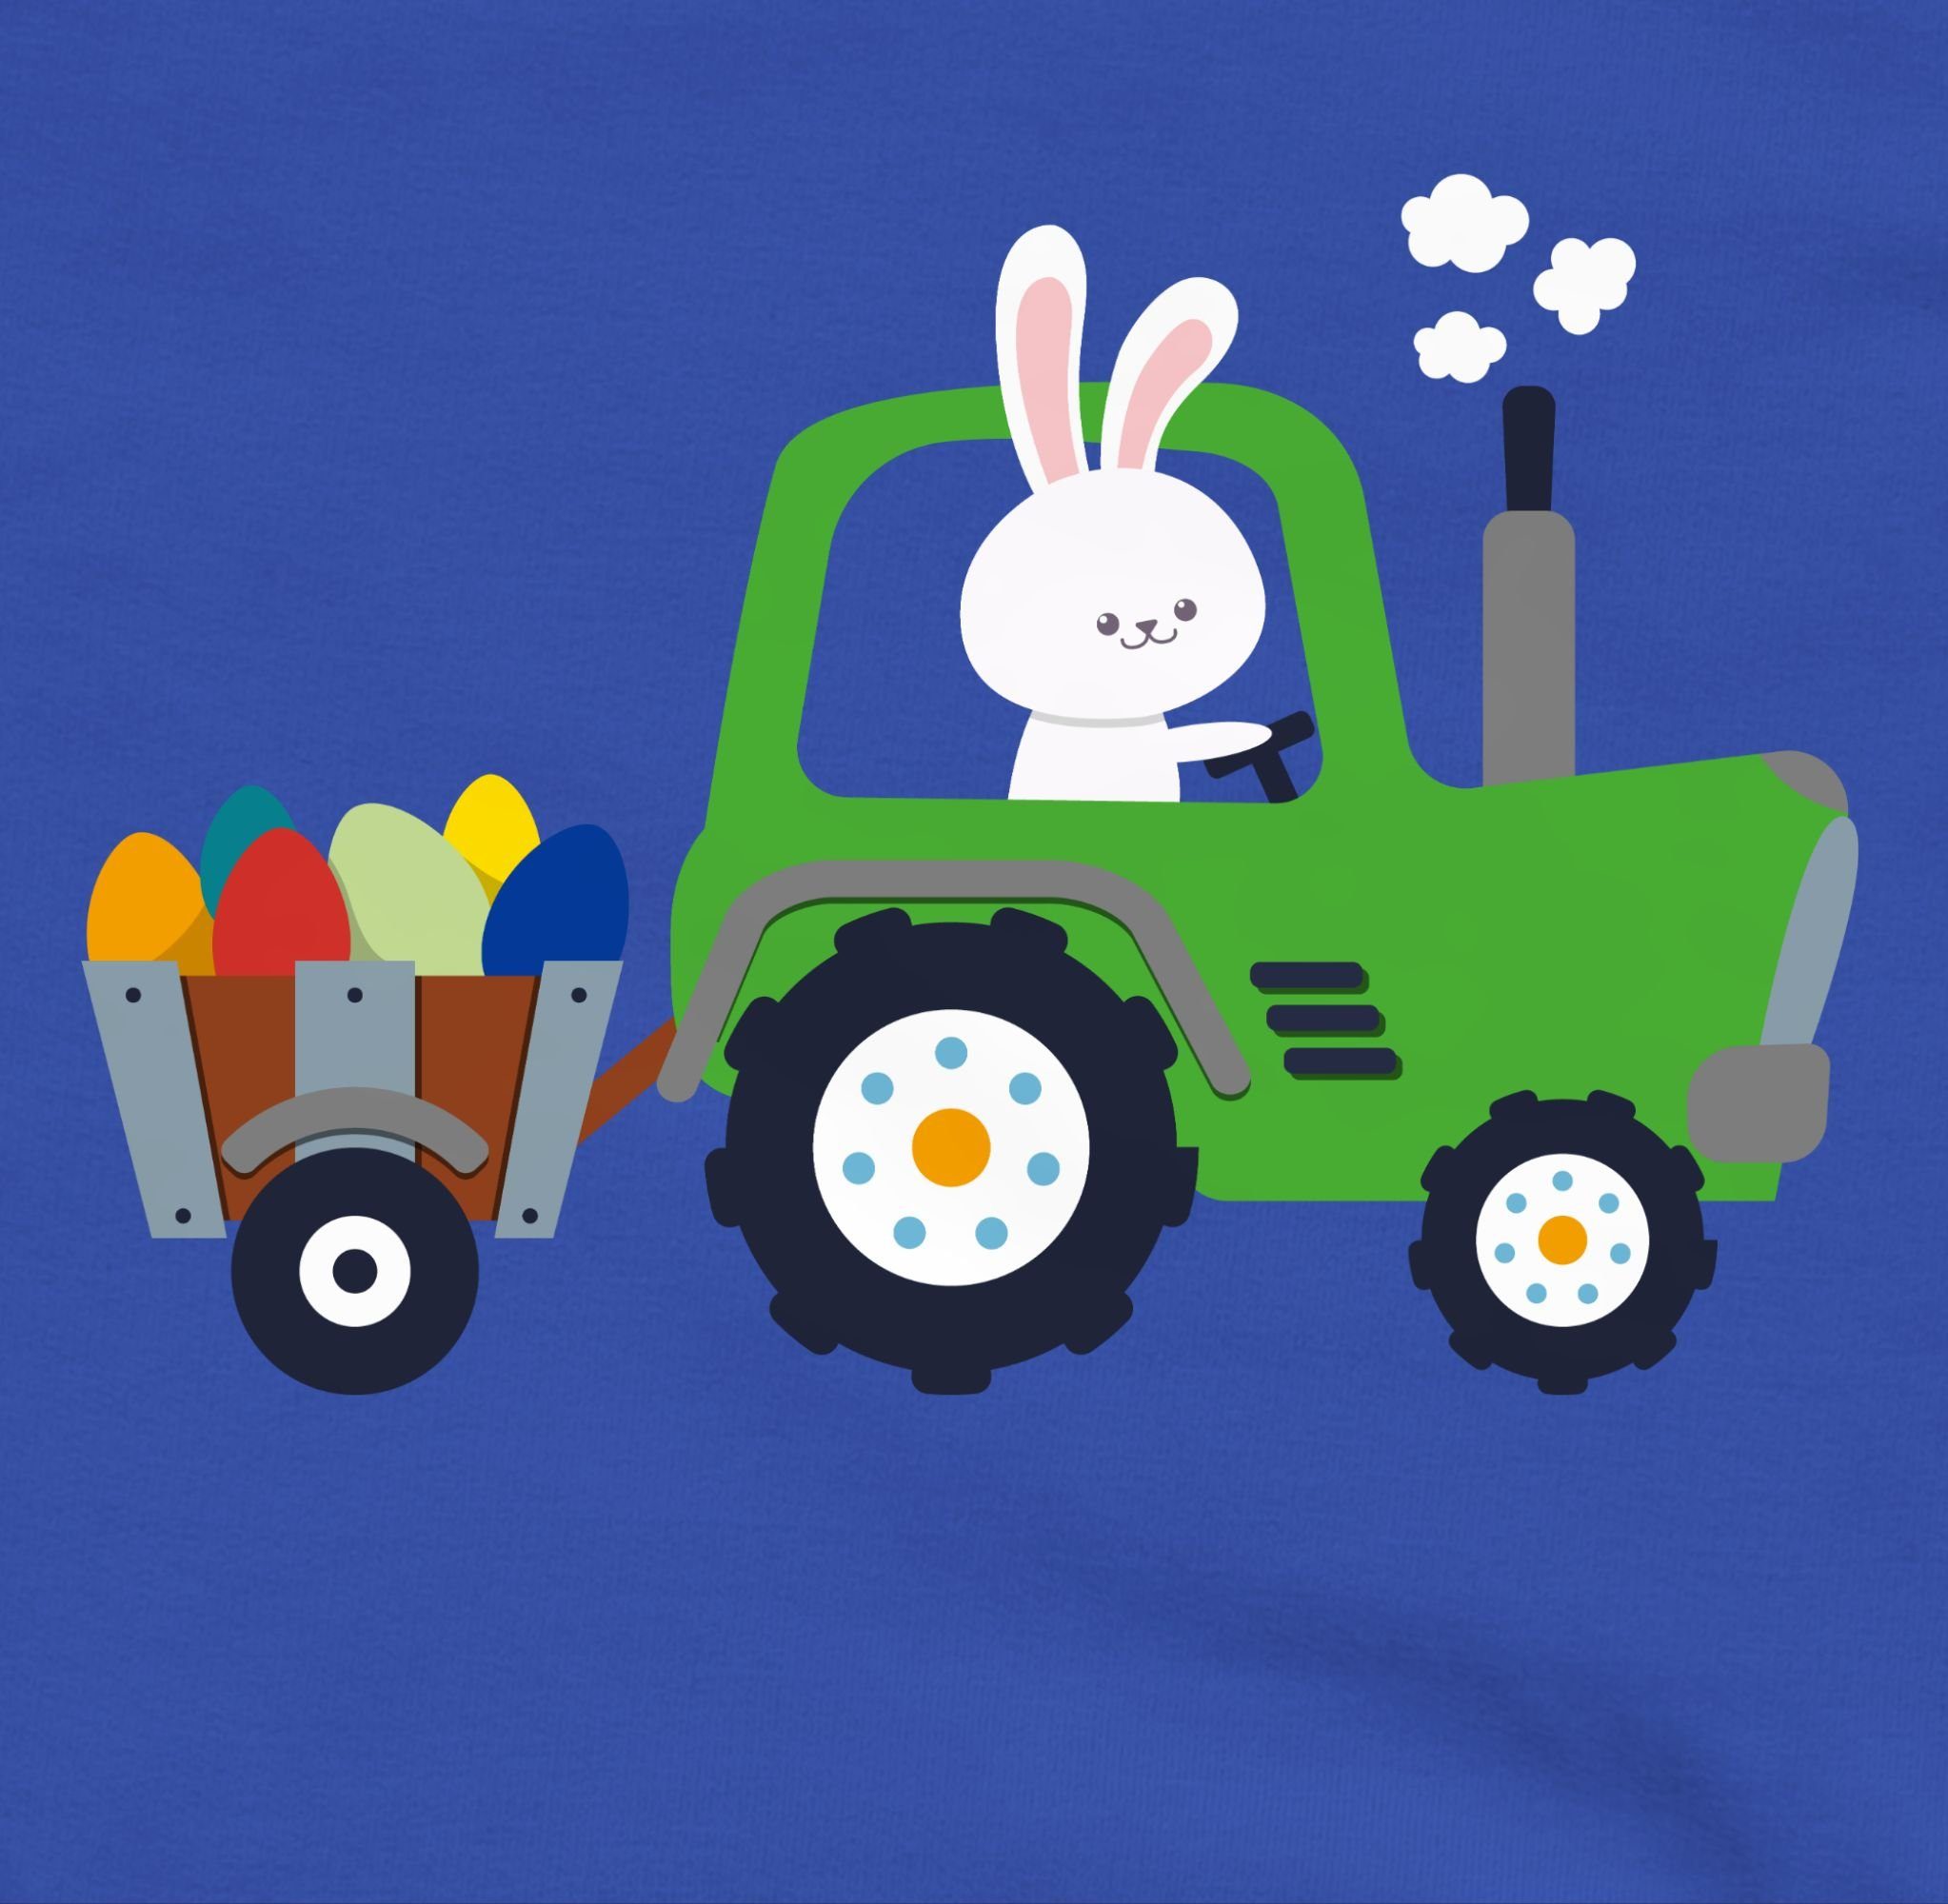 Shirtracer Sweatshirt Traktor Hase Ostereier Royalblau 2 Ostern Geschenk